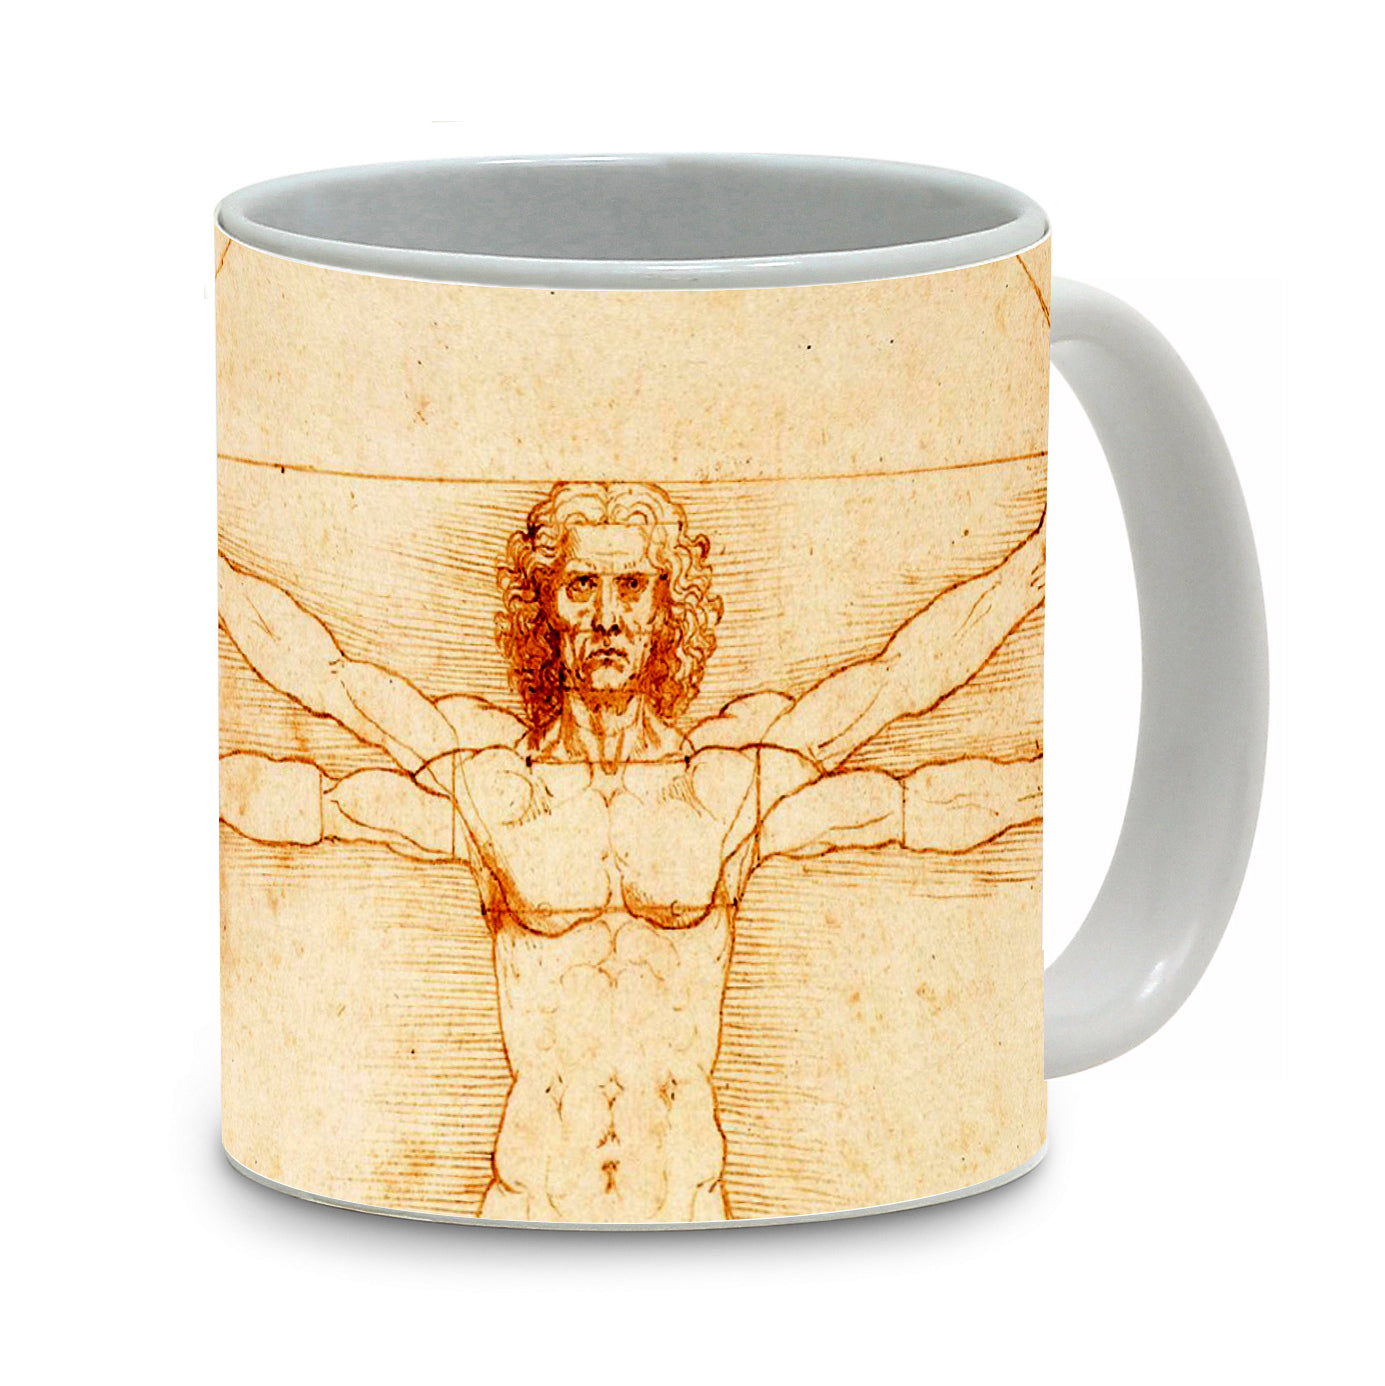 SUBLIMART: Affresco Mug - Leonardo Da Vinci Architettura di Vetruvio